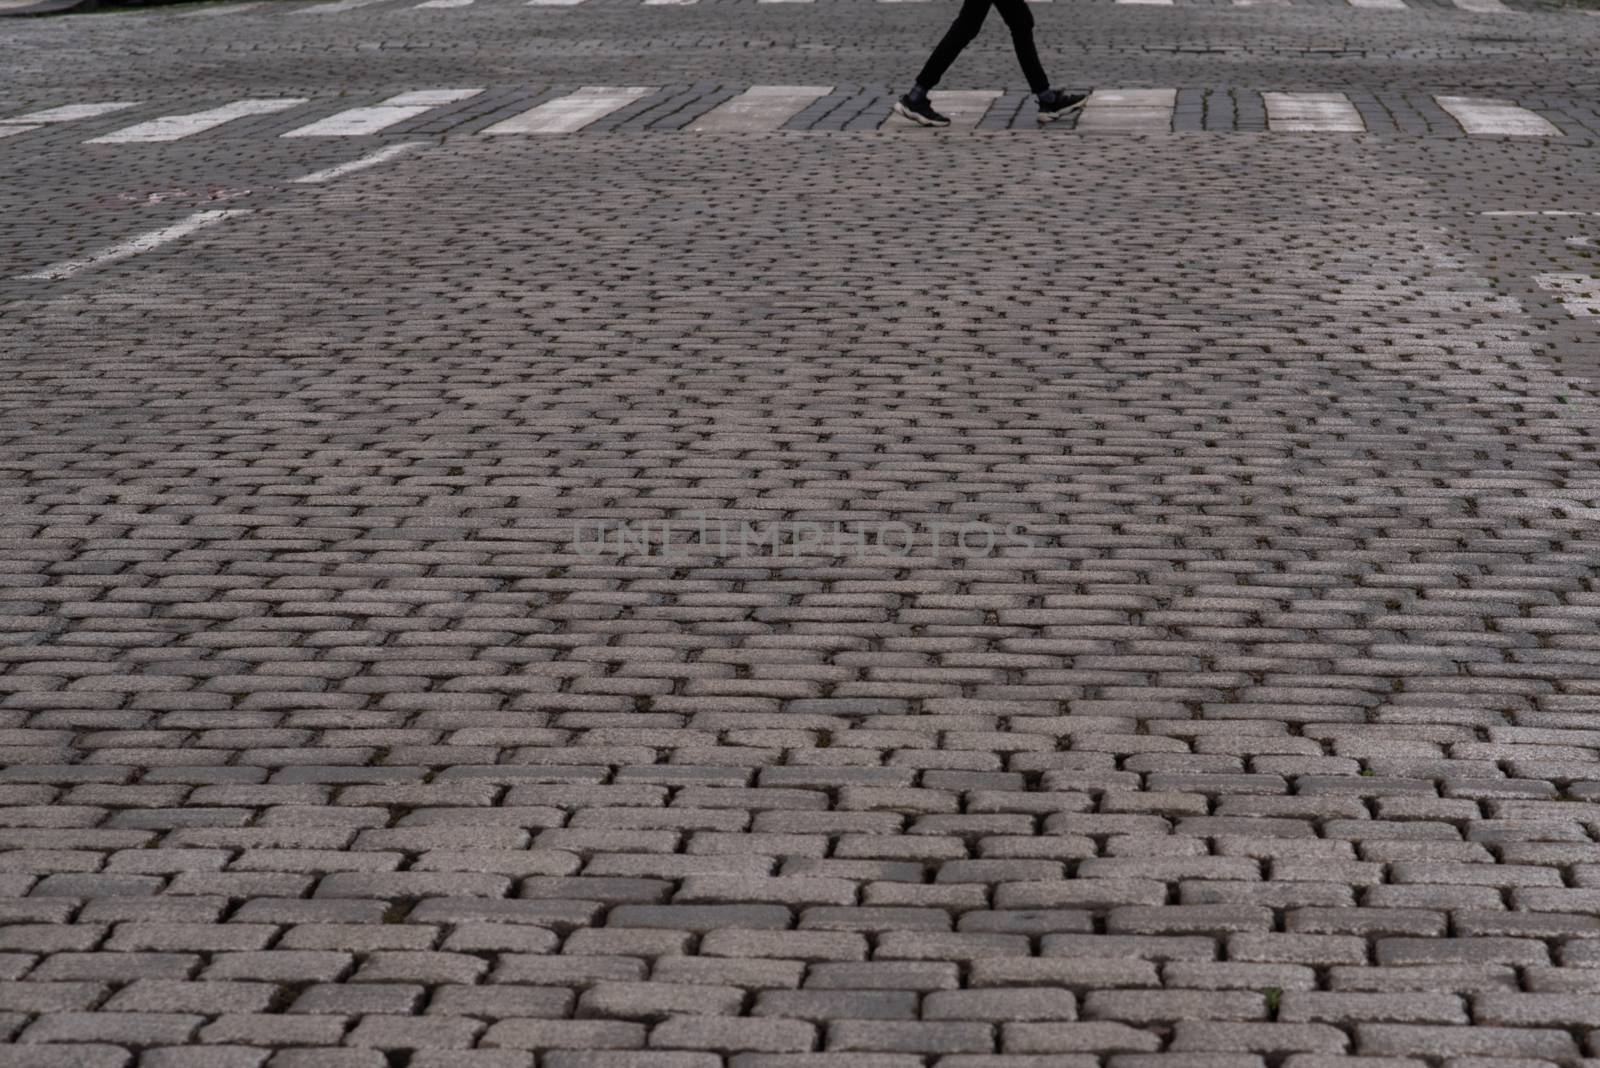 Empty street with a pedestrian walking by gonzalobell